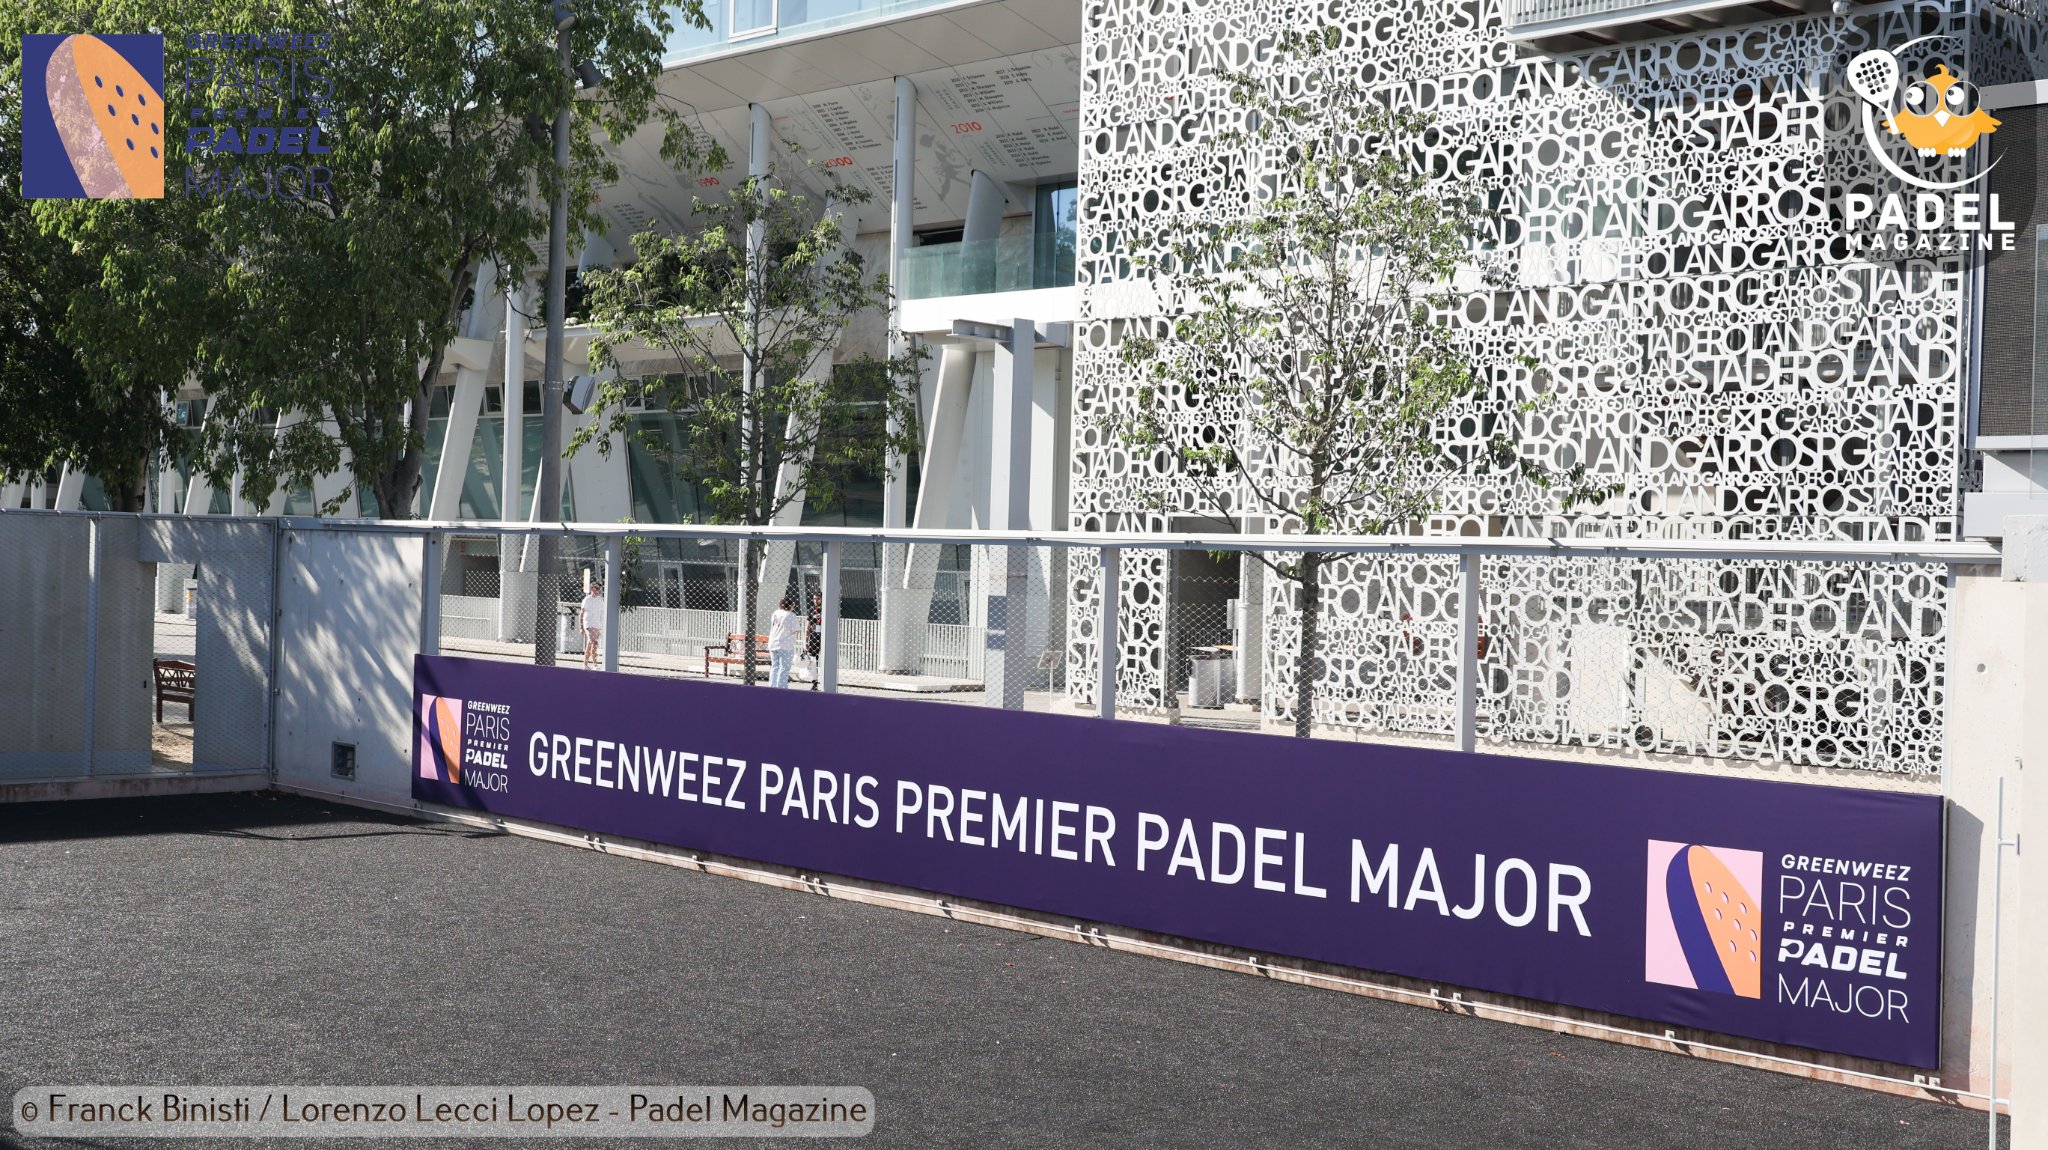 Greenweez Paris Premier Padel Major ：四半期決算